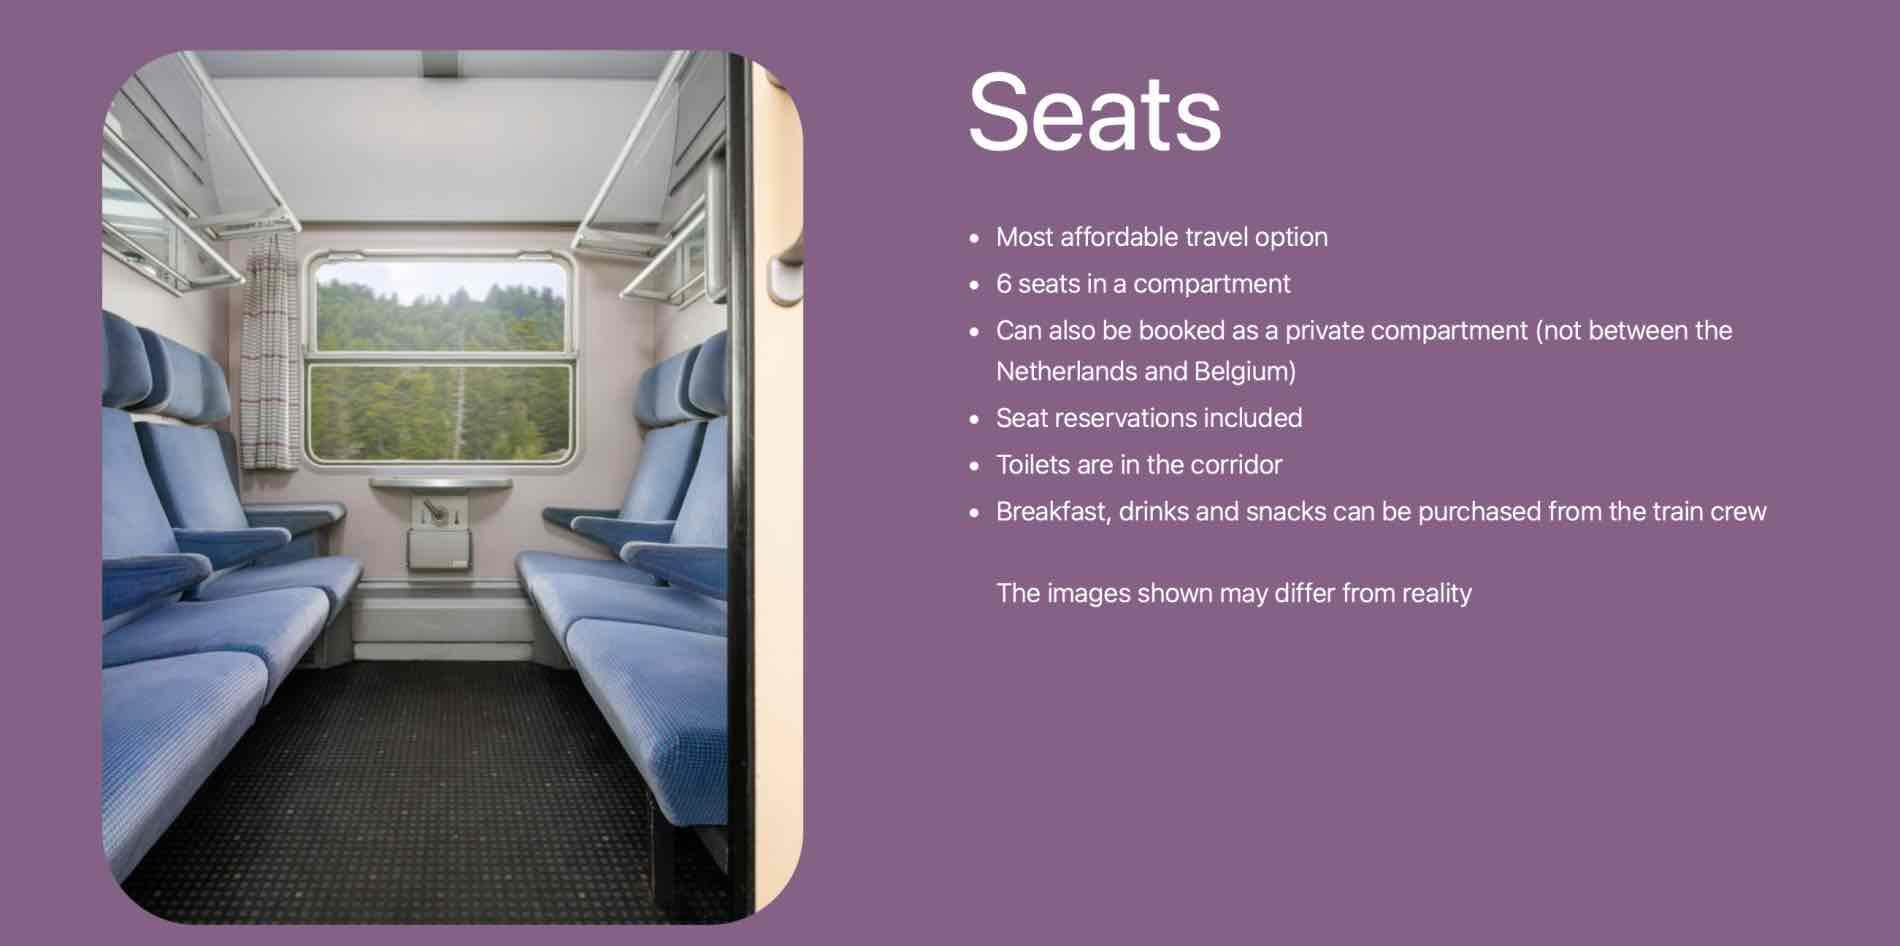 Information on standard seats